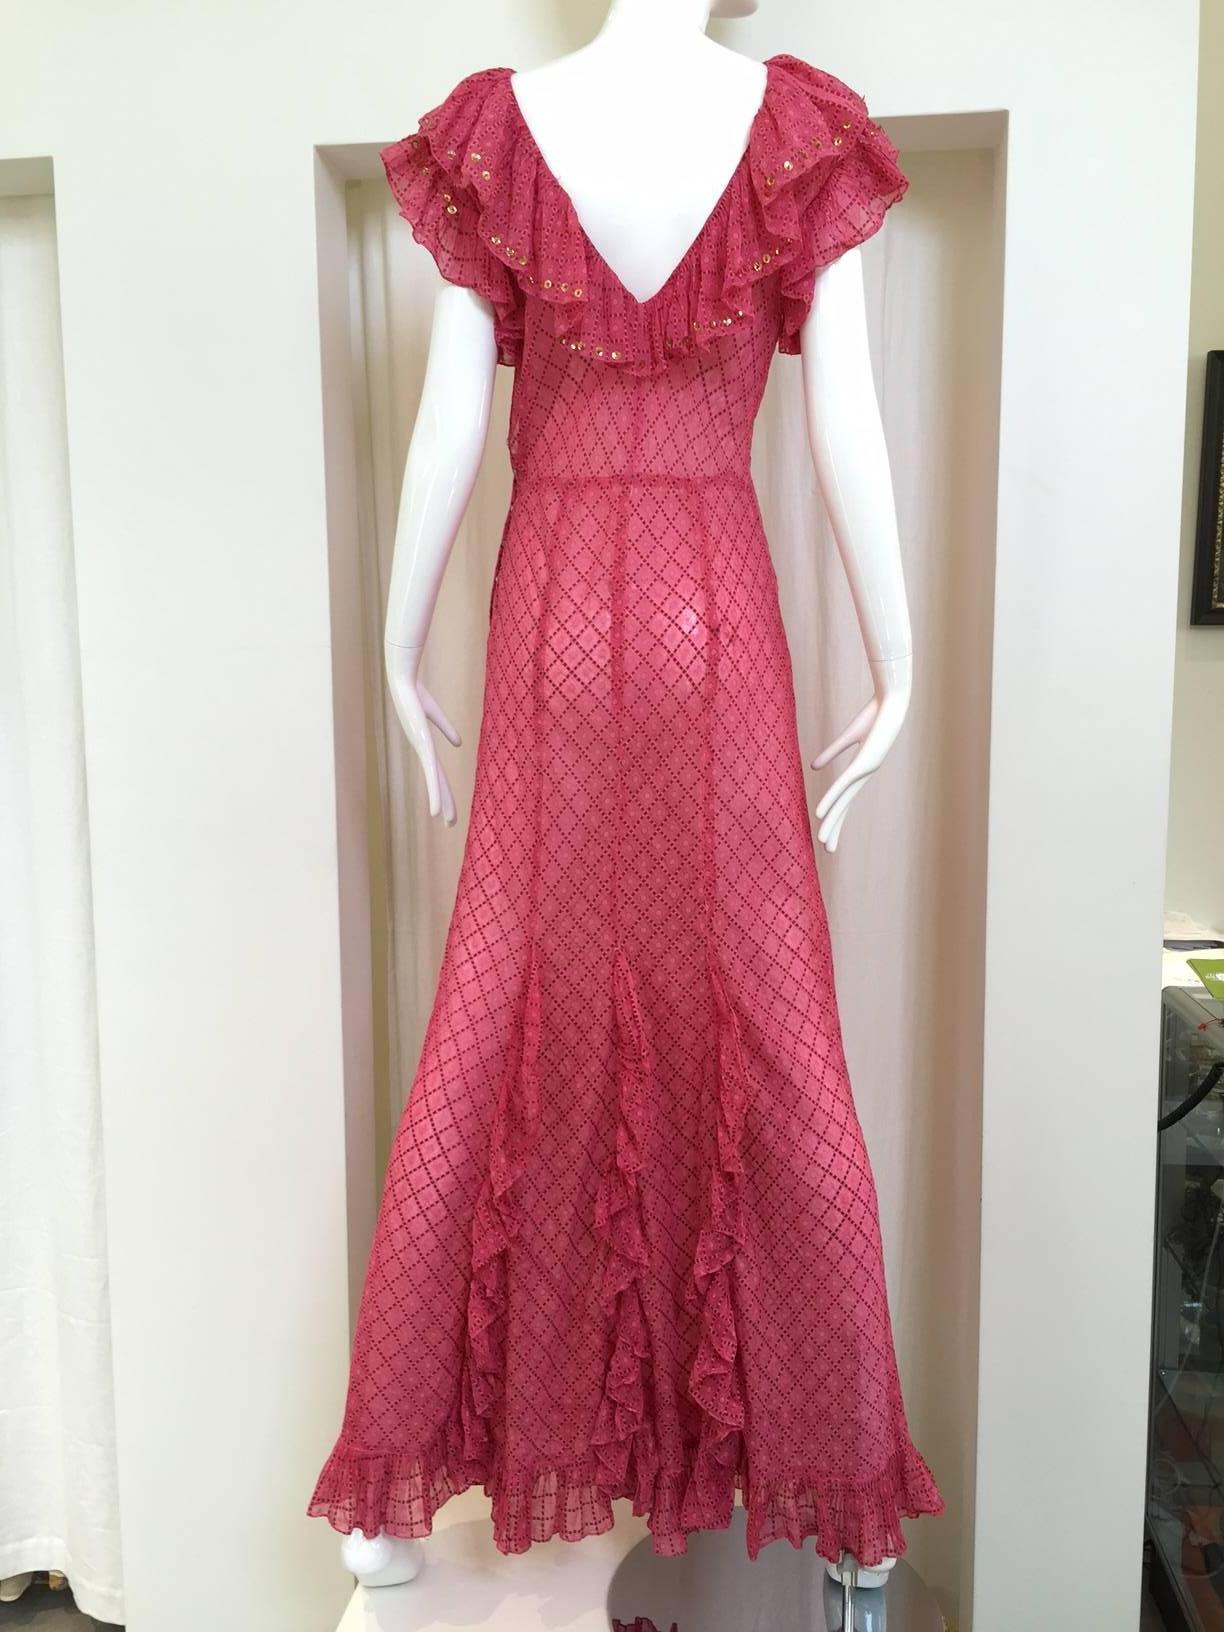 1930s Pink silk dress with gold sequins.
Bust: 34/ Hip: 34